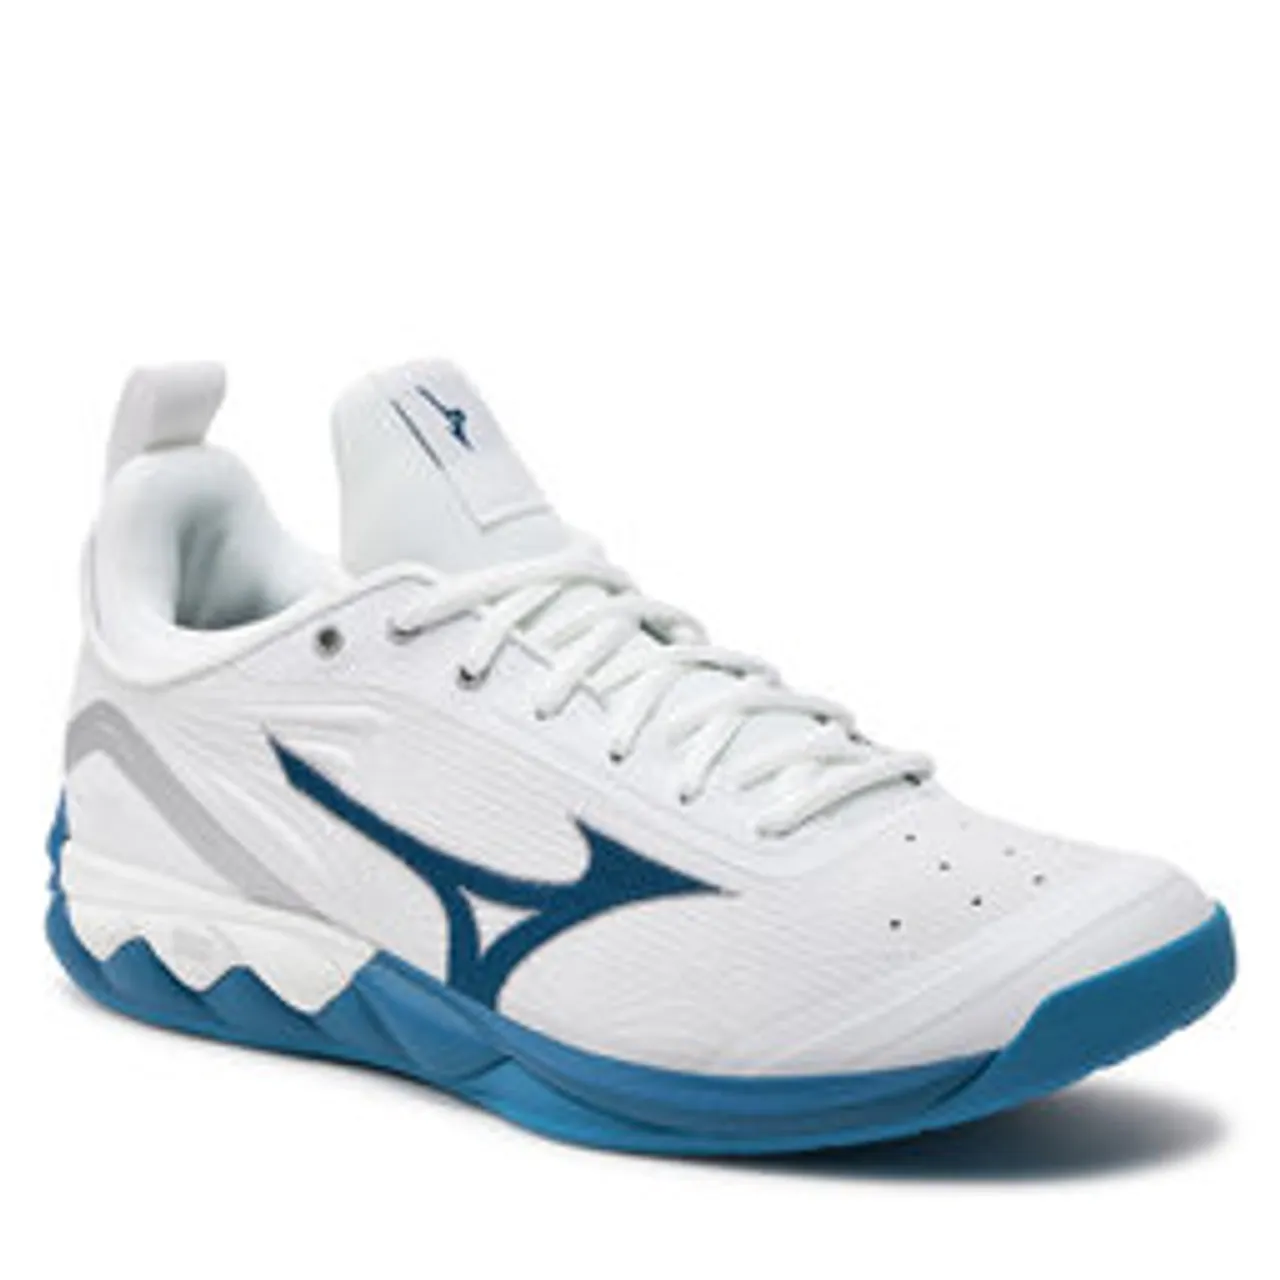 Schuhe Mizuno Wave Luminous 2 V1GA2120 White/Sailor Blue/Silver 86